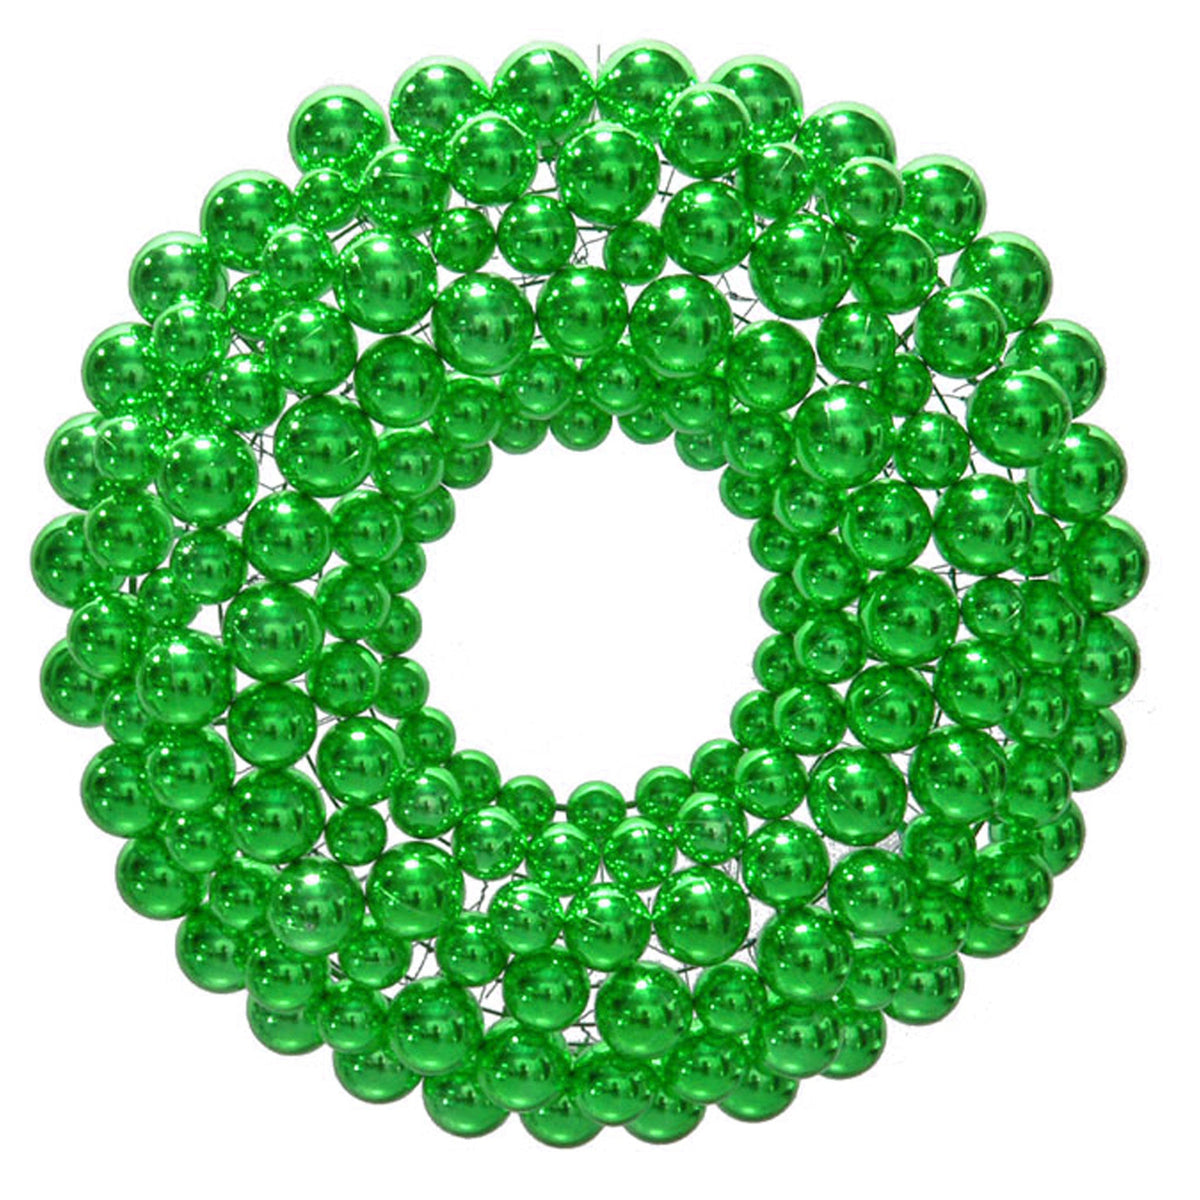 Green Ball Ornament Wreath